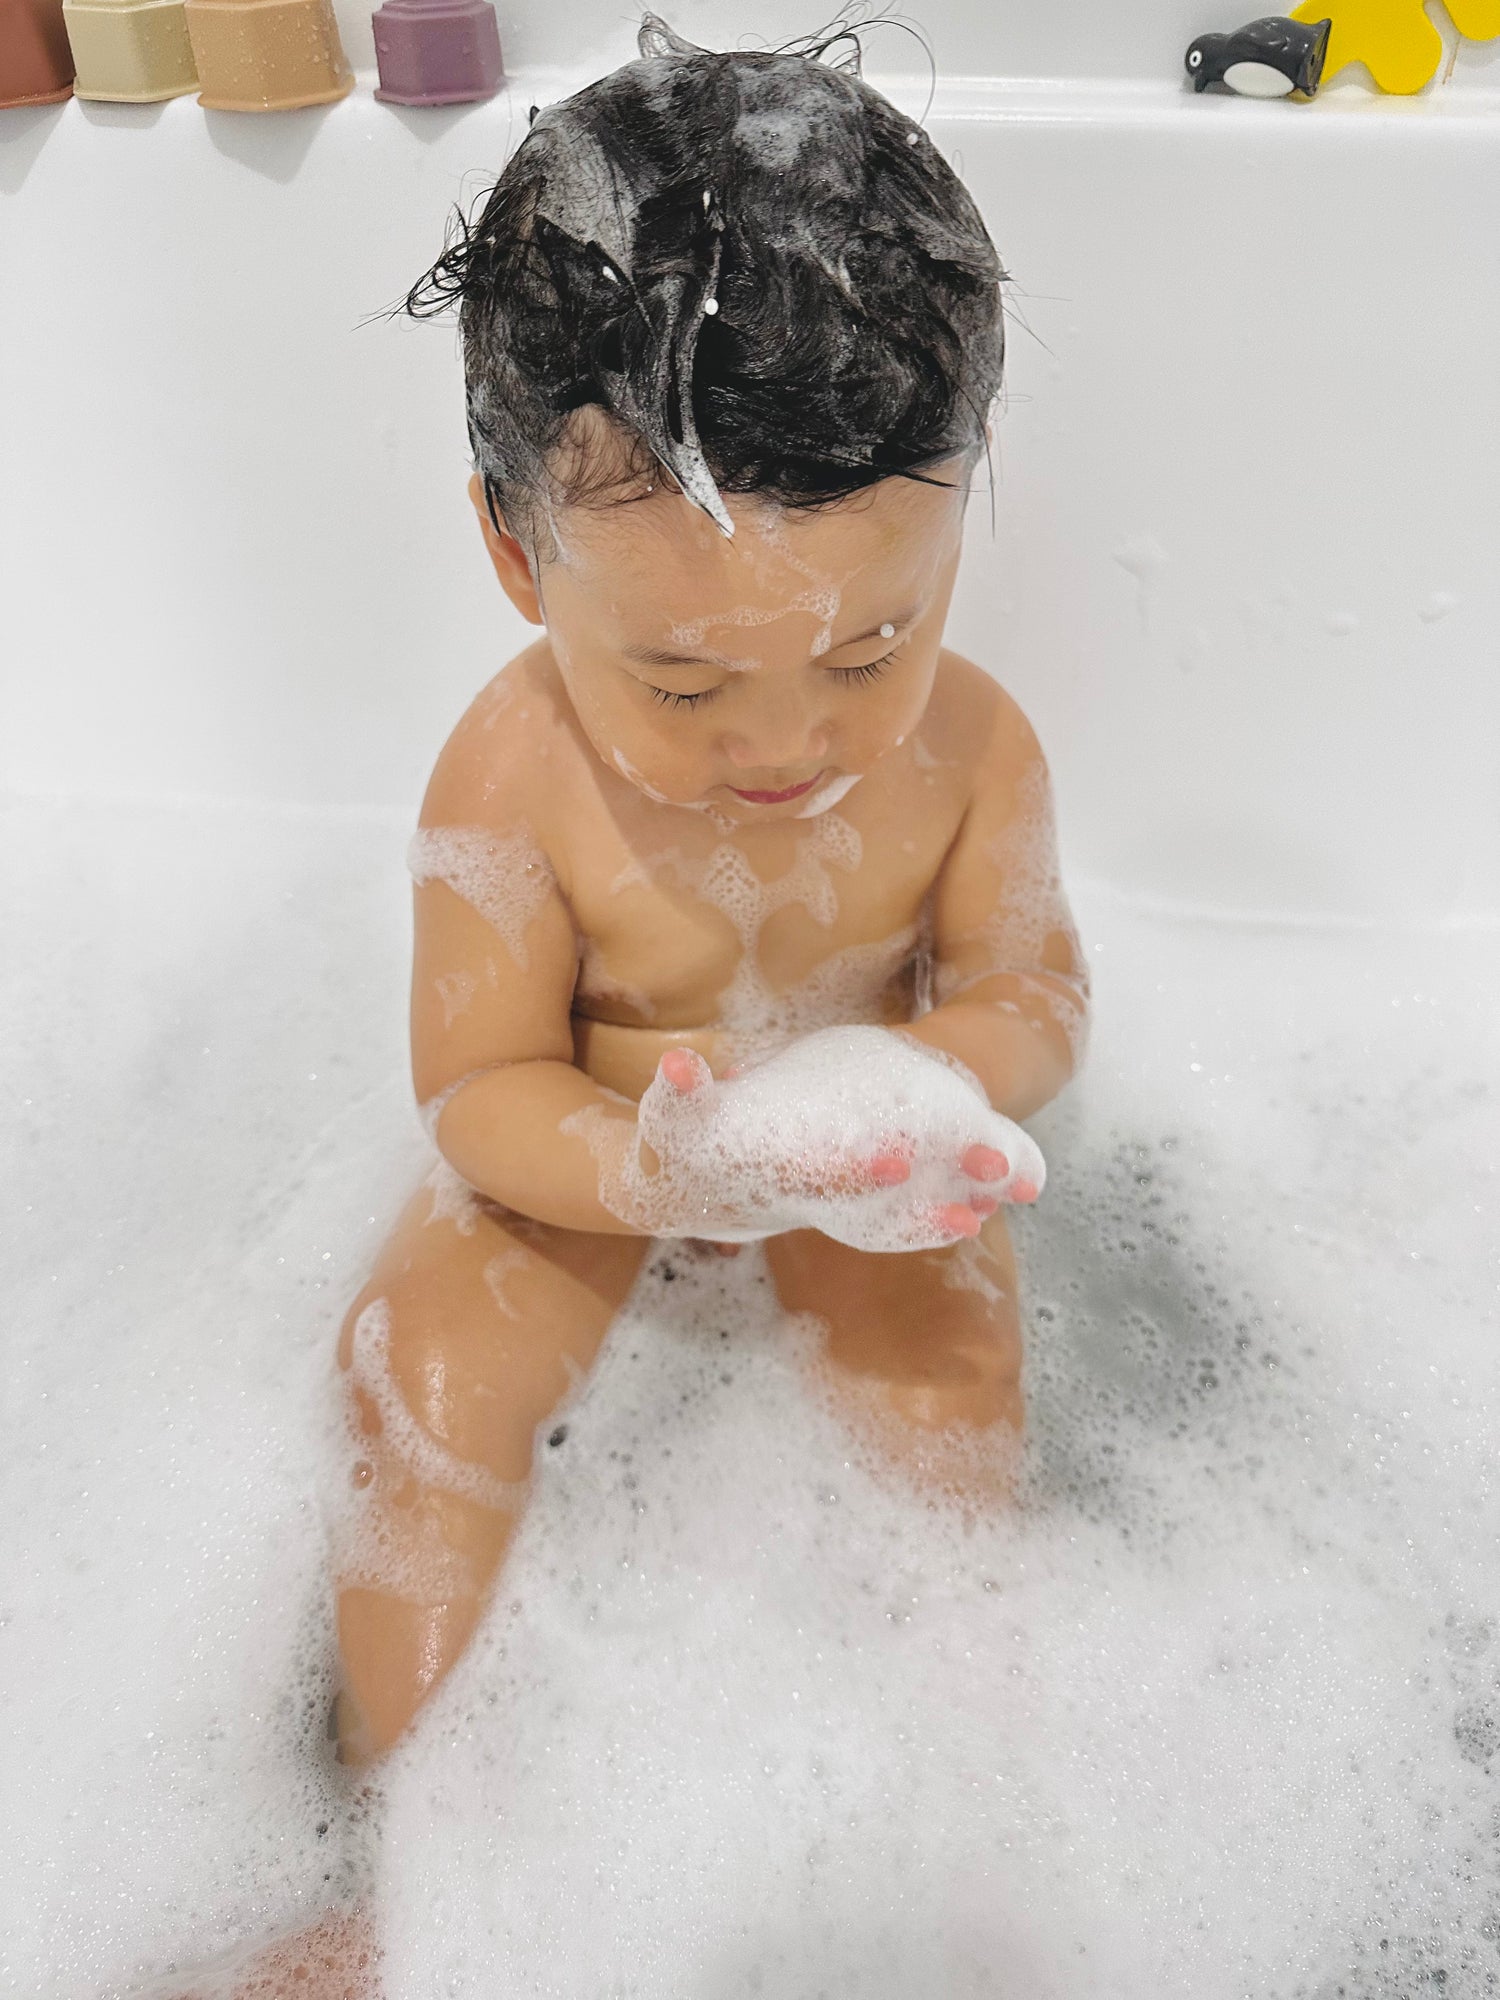 Baby Wash & Bubble Bath - Wotnot Naturals | MLC Space